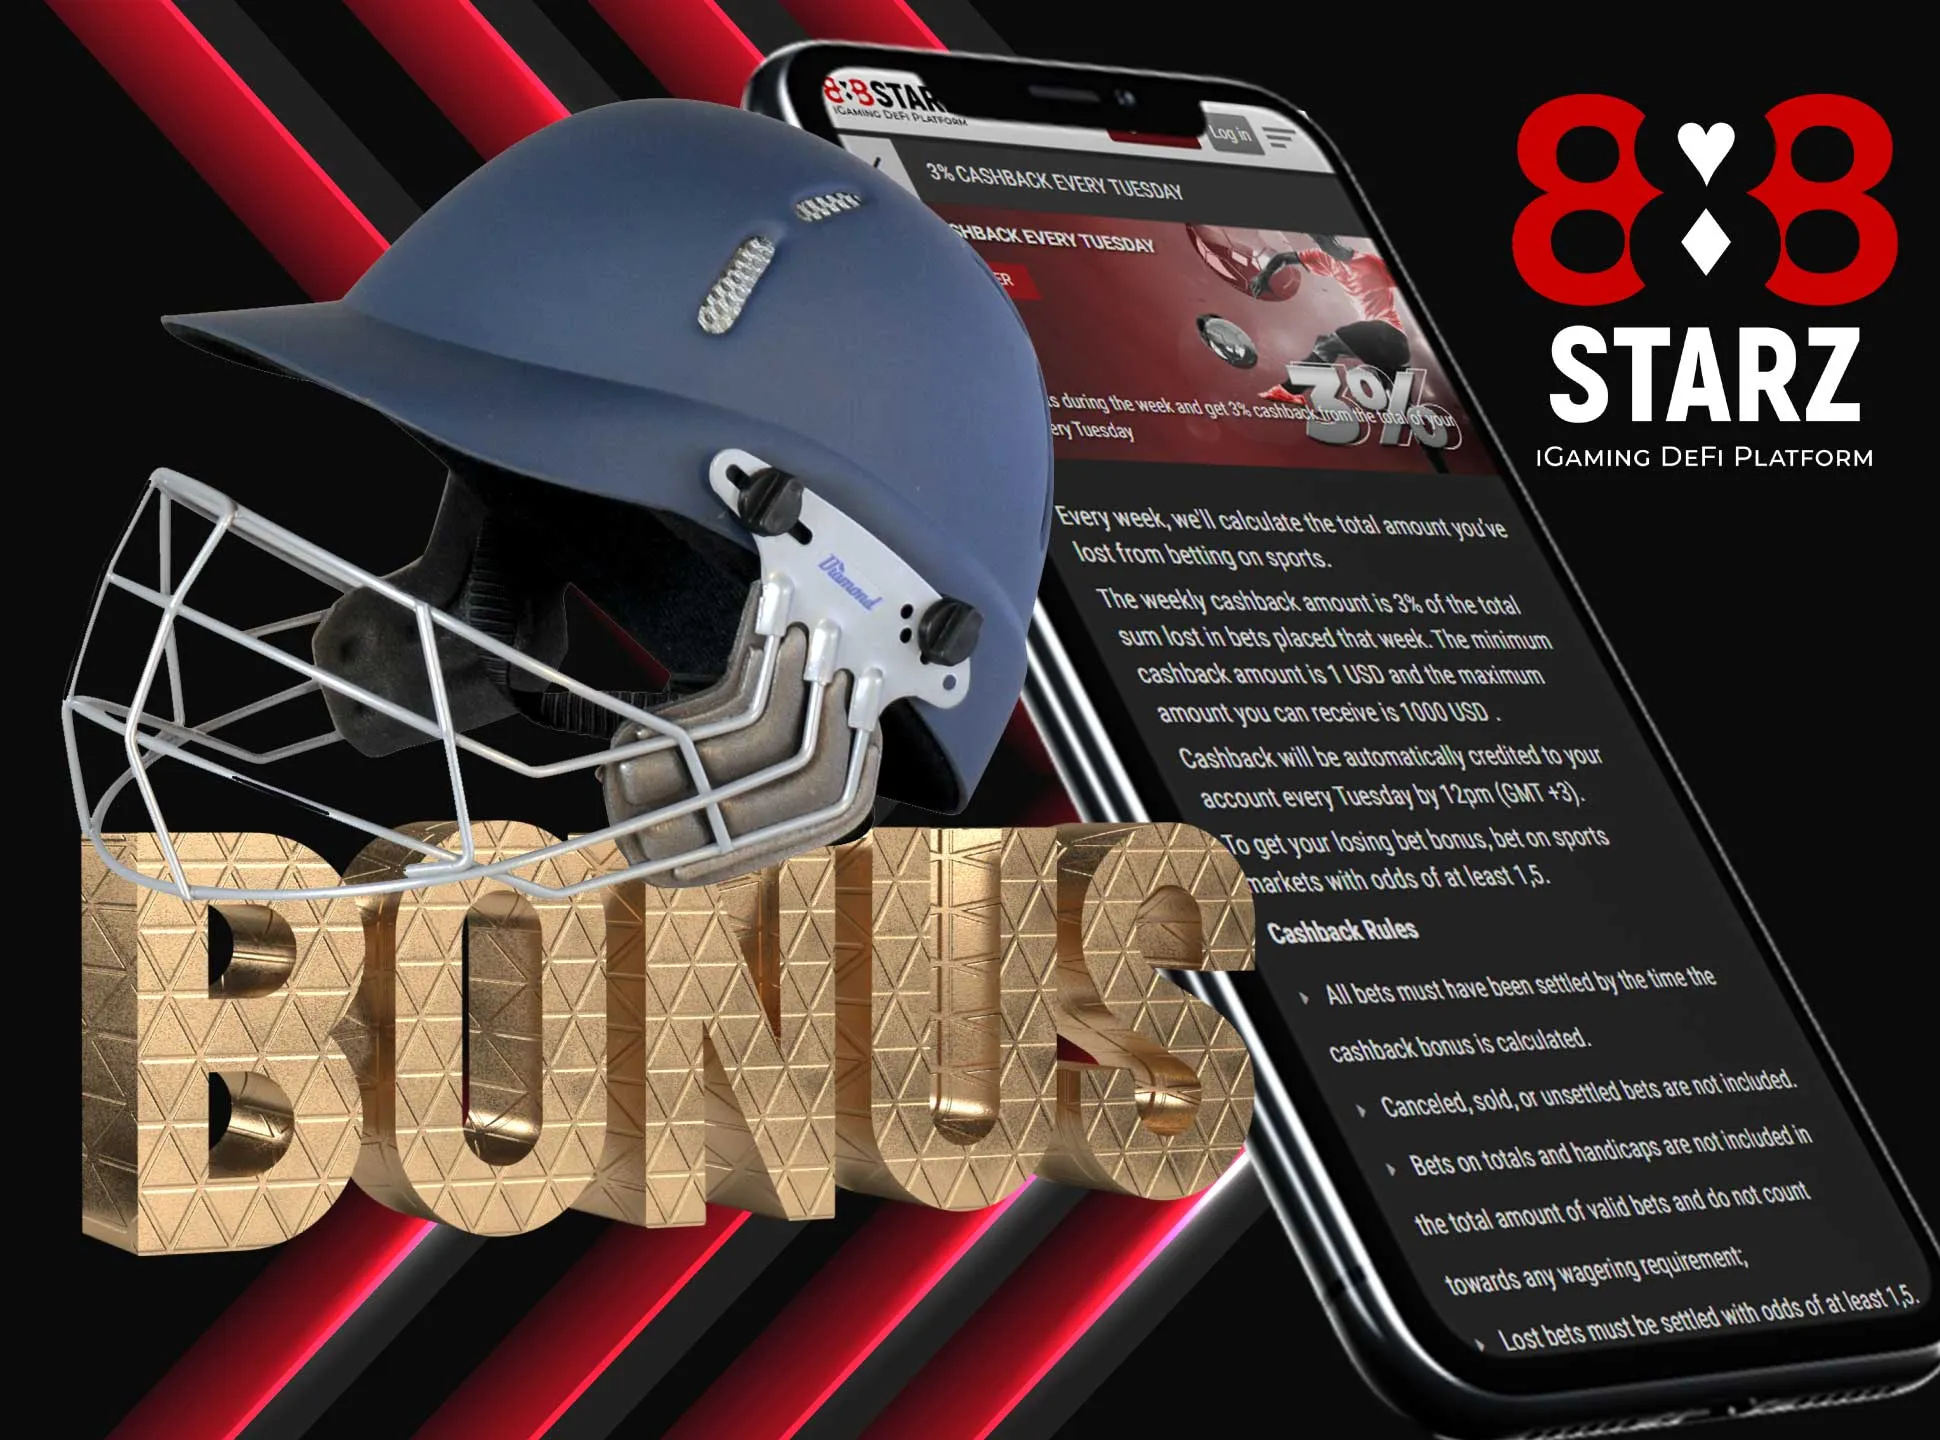 888starz sports bonus gives you up to 11,550 BDT.